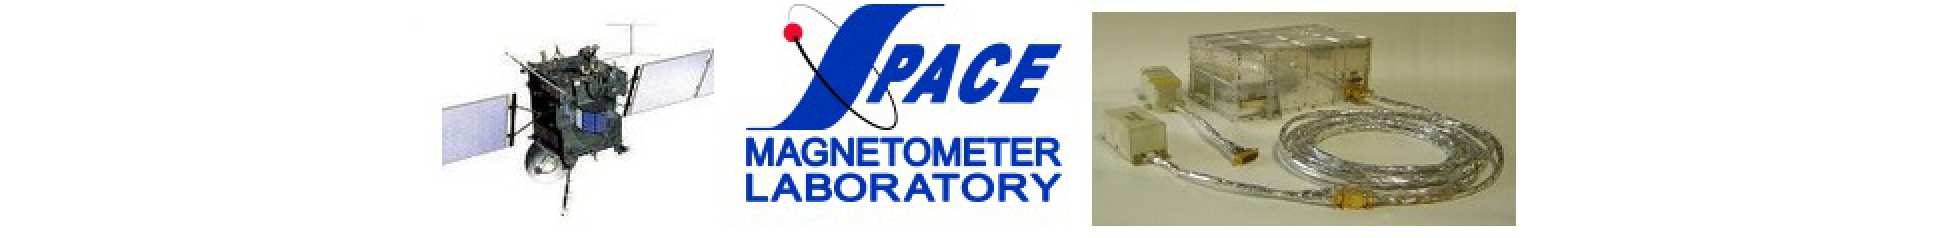 Space Magnetometer Laboratory